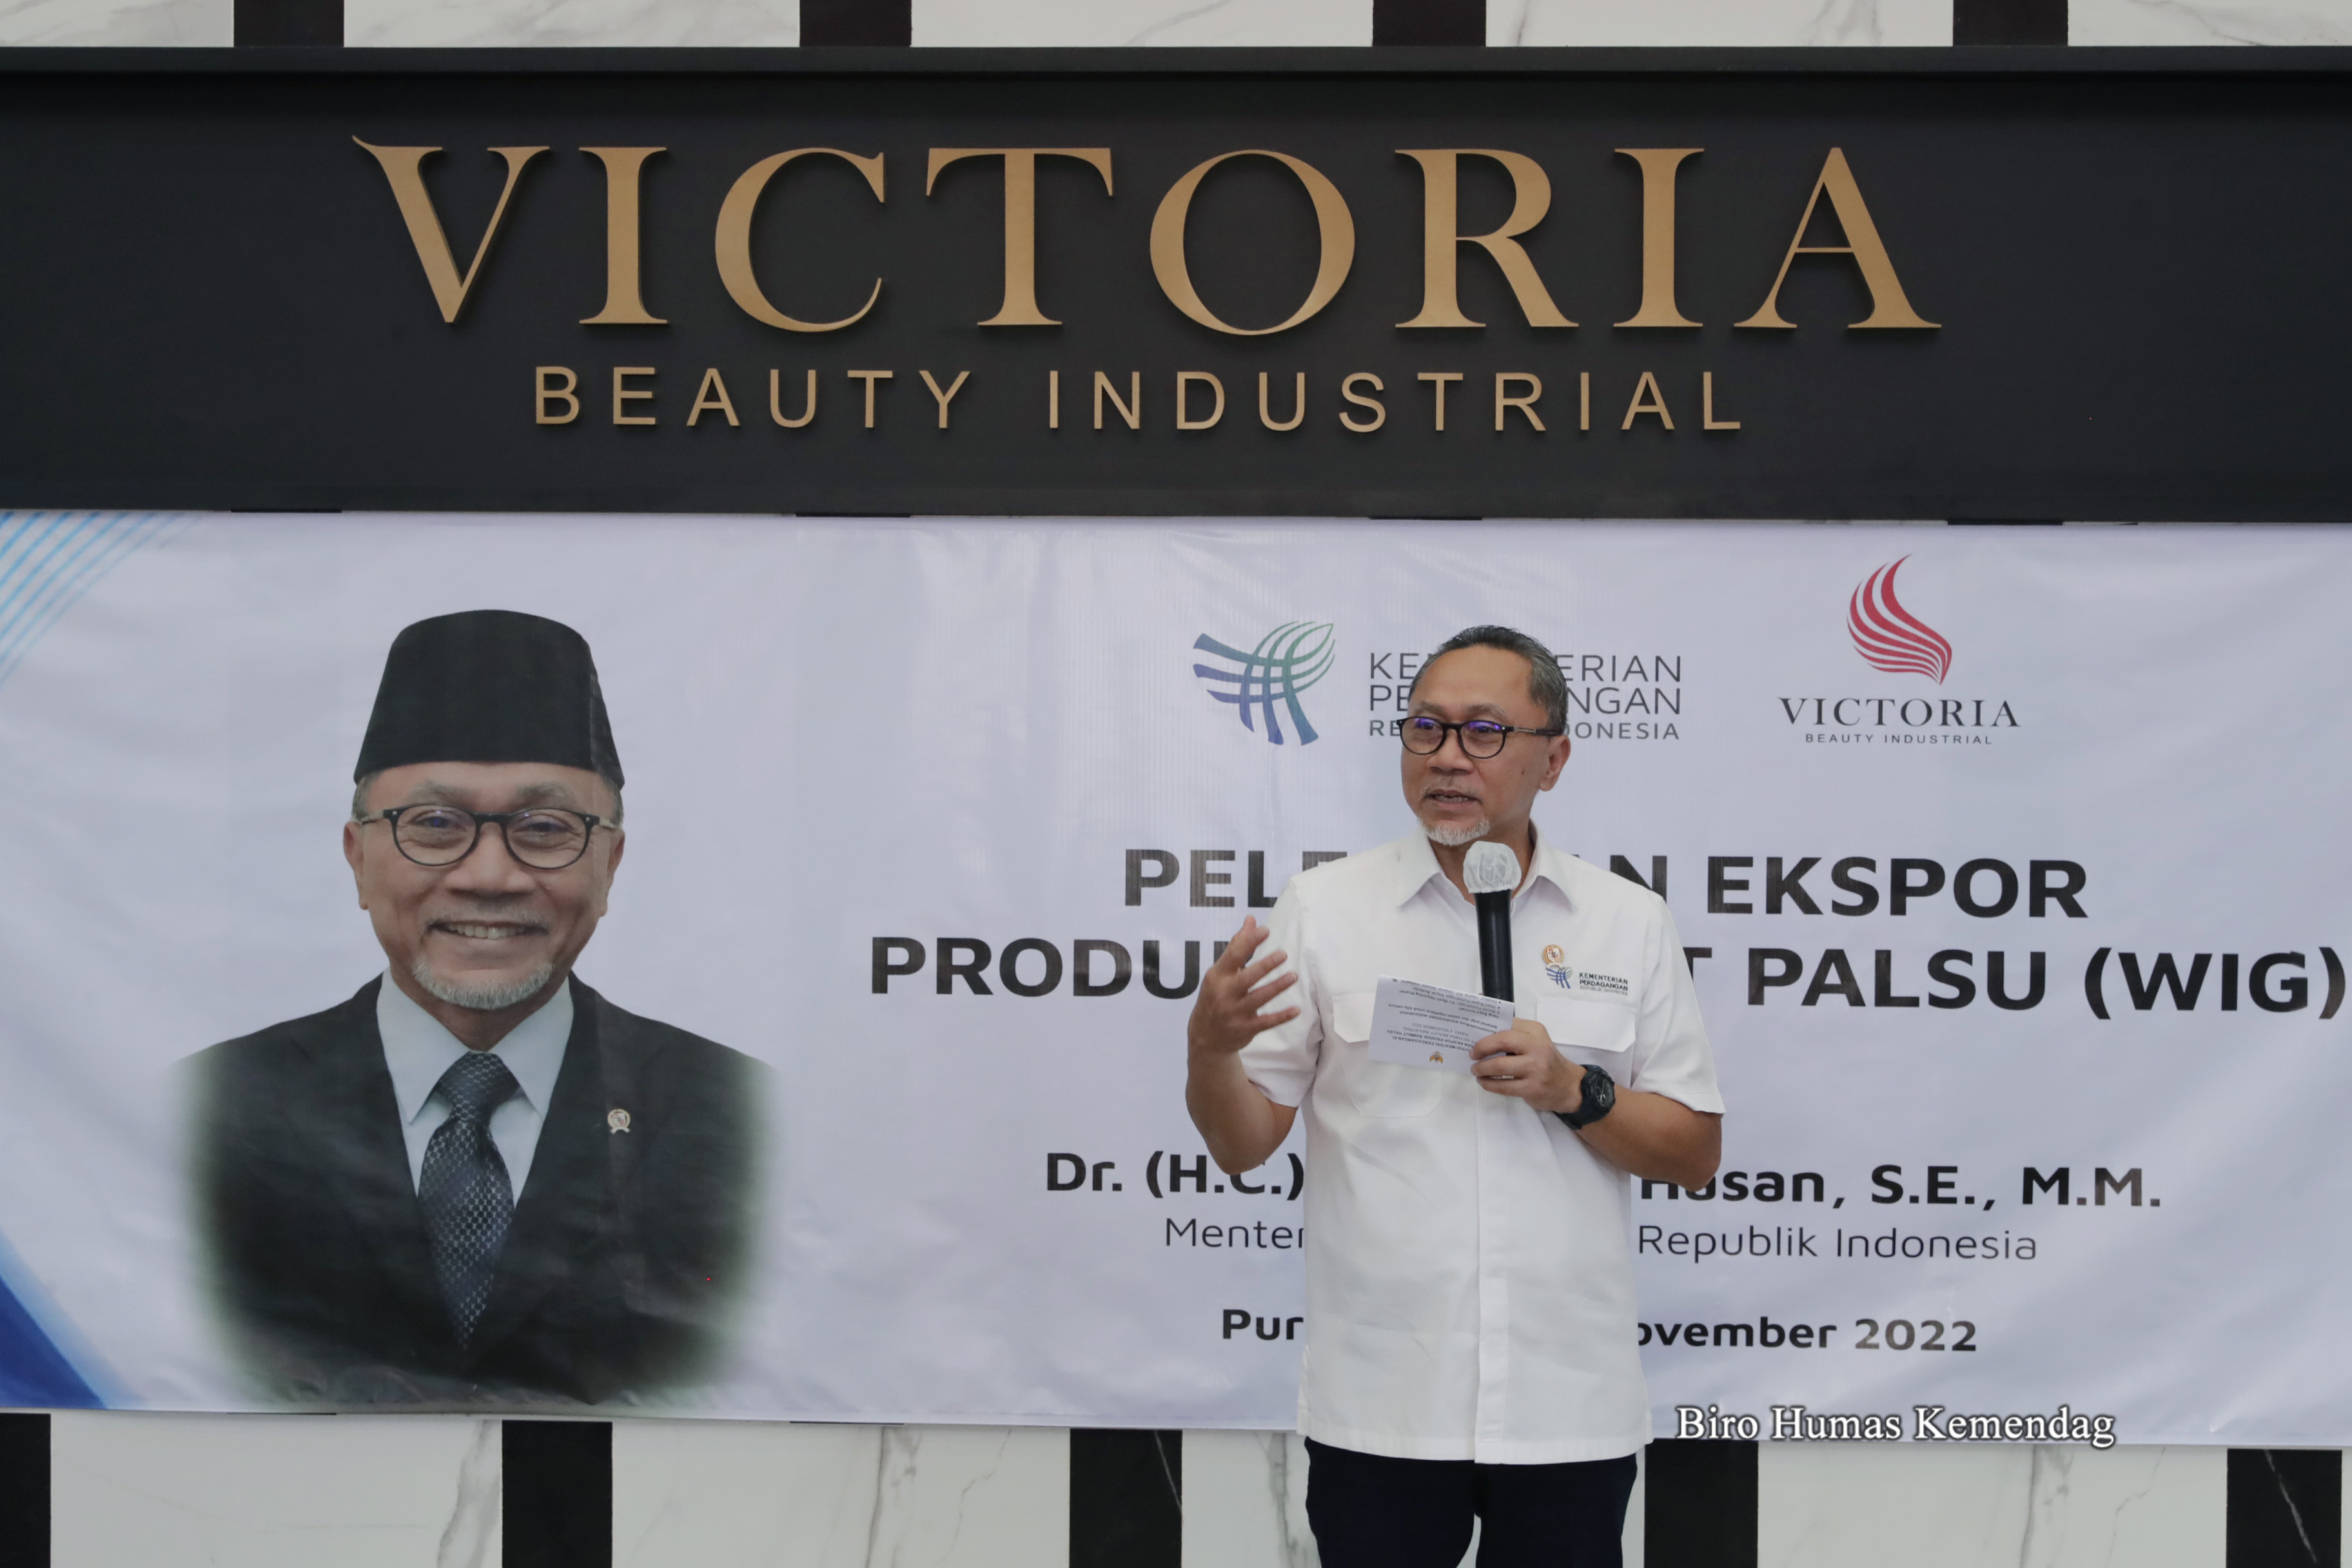 Pelepasan Ekspor Rambut Palsu PT Victoria Beauty Industrial di Kabupaten  Purbalingga, Jawa Tengah - Kementerian Perdagangan Republik Indonesia